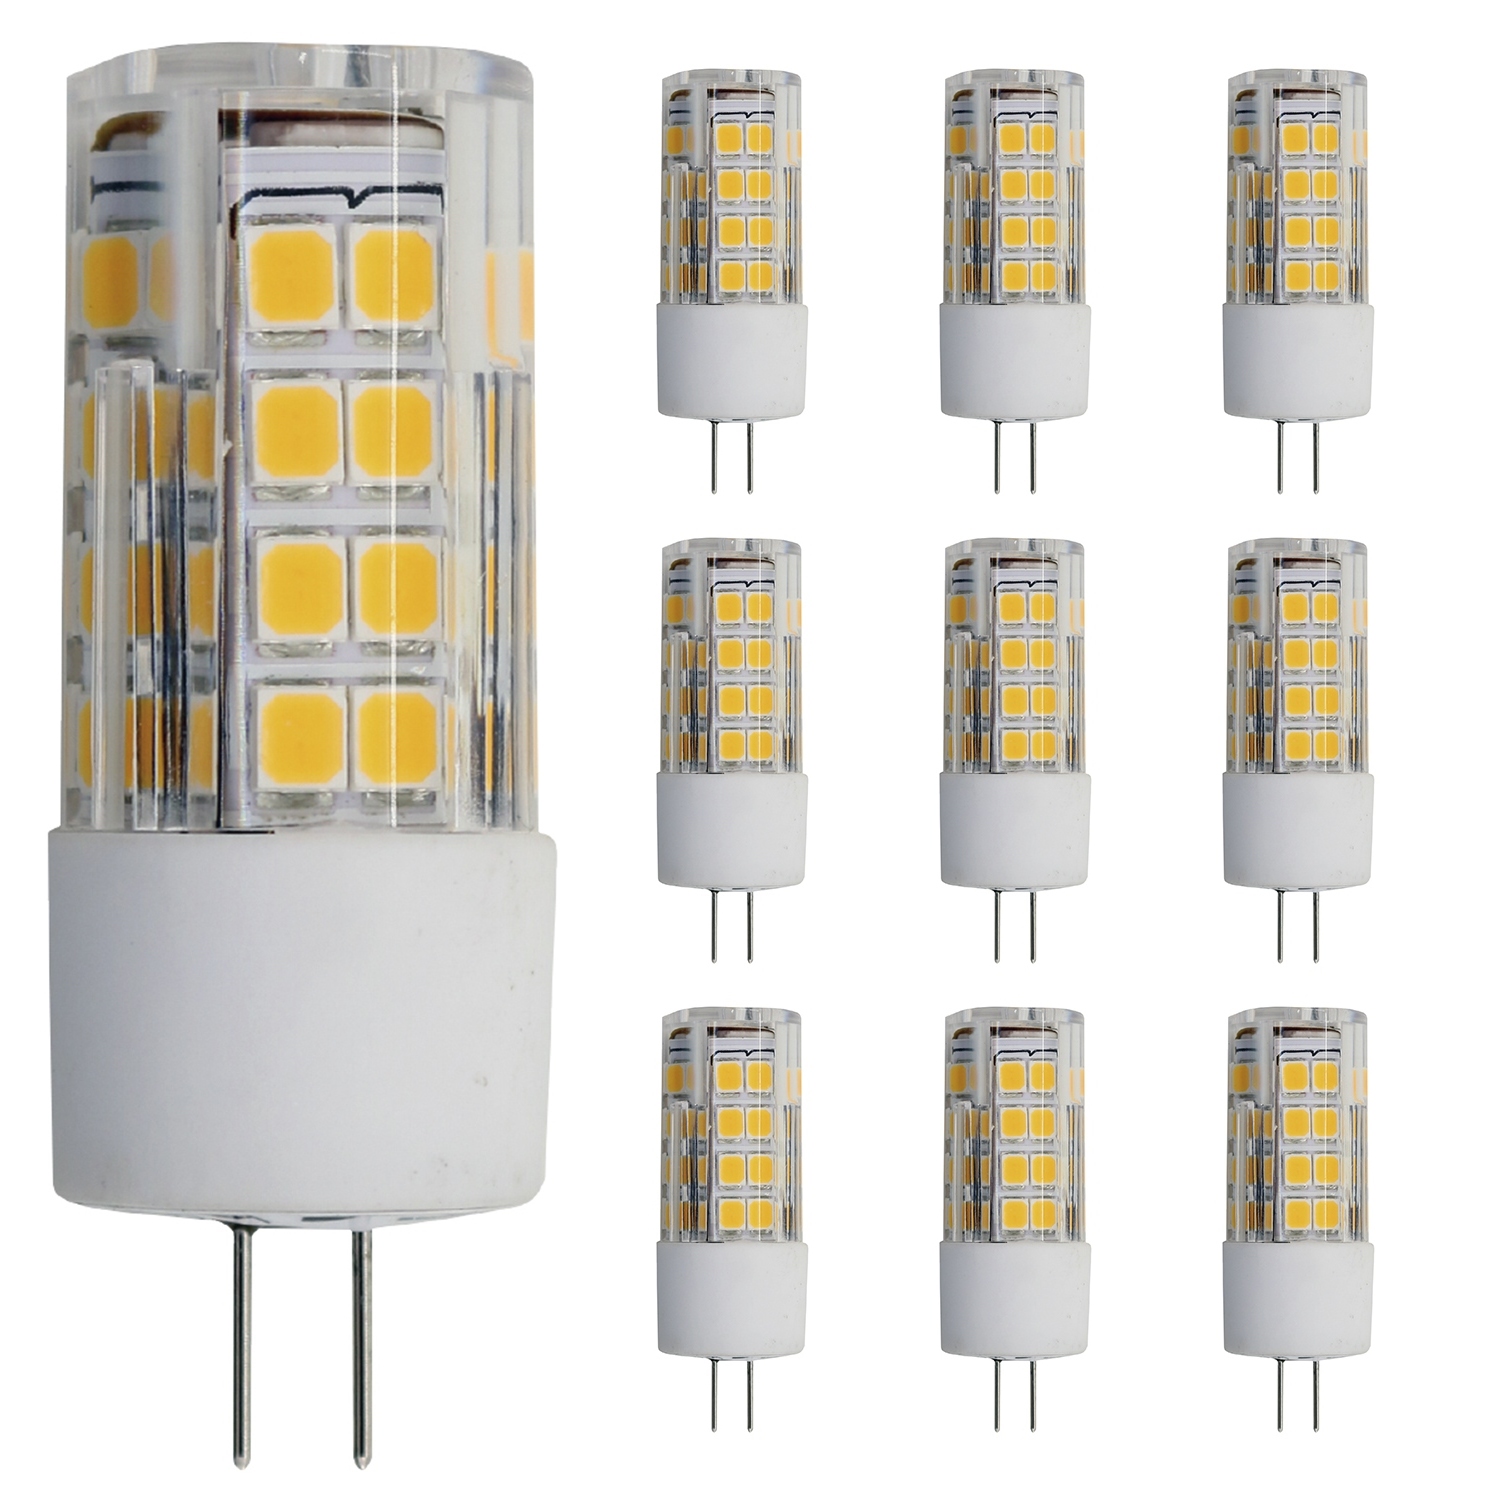 Lumina G4 LED Bulb – 4W Bi-Pin LED Light Bulb Landscape Lighting Bulb, Non-dimmable, Shatterproof, Dustproof – AC/DC 12 Volt, 3000K Warm White, 400 Lumens – 35W Halogen Bulb Equivalent (10 Pack)